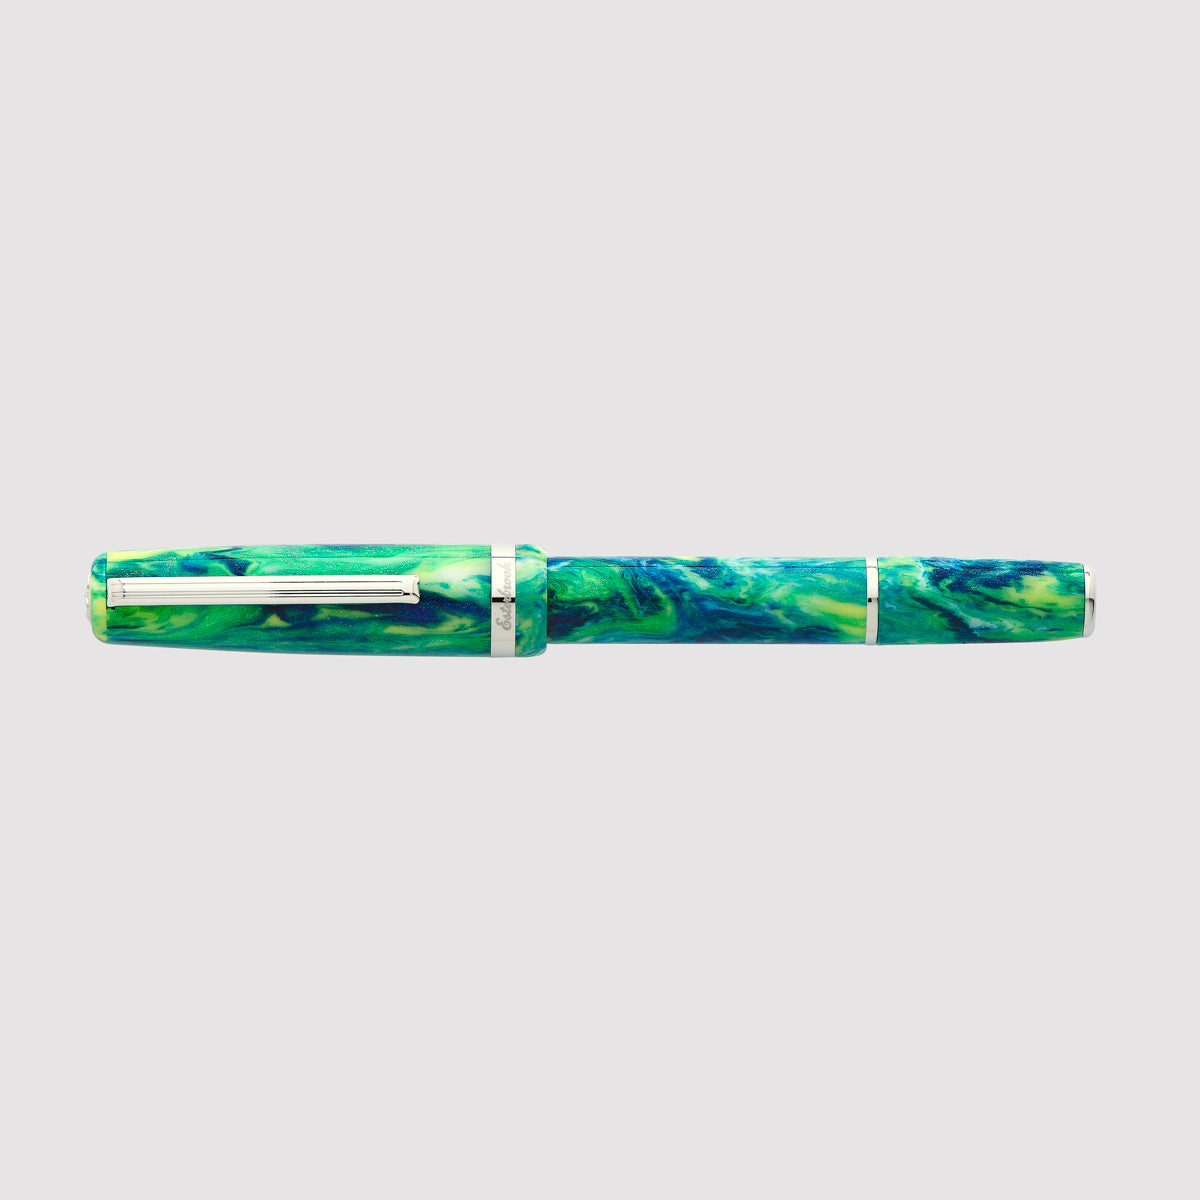 JR Pocket Pen - DiamondCast - Beleza Palladium Trim - Custom Scribe Nib